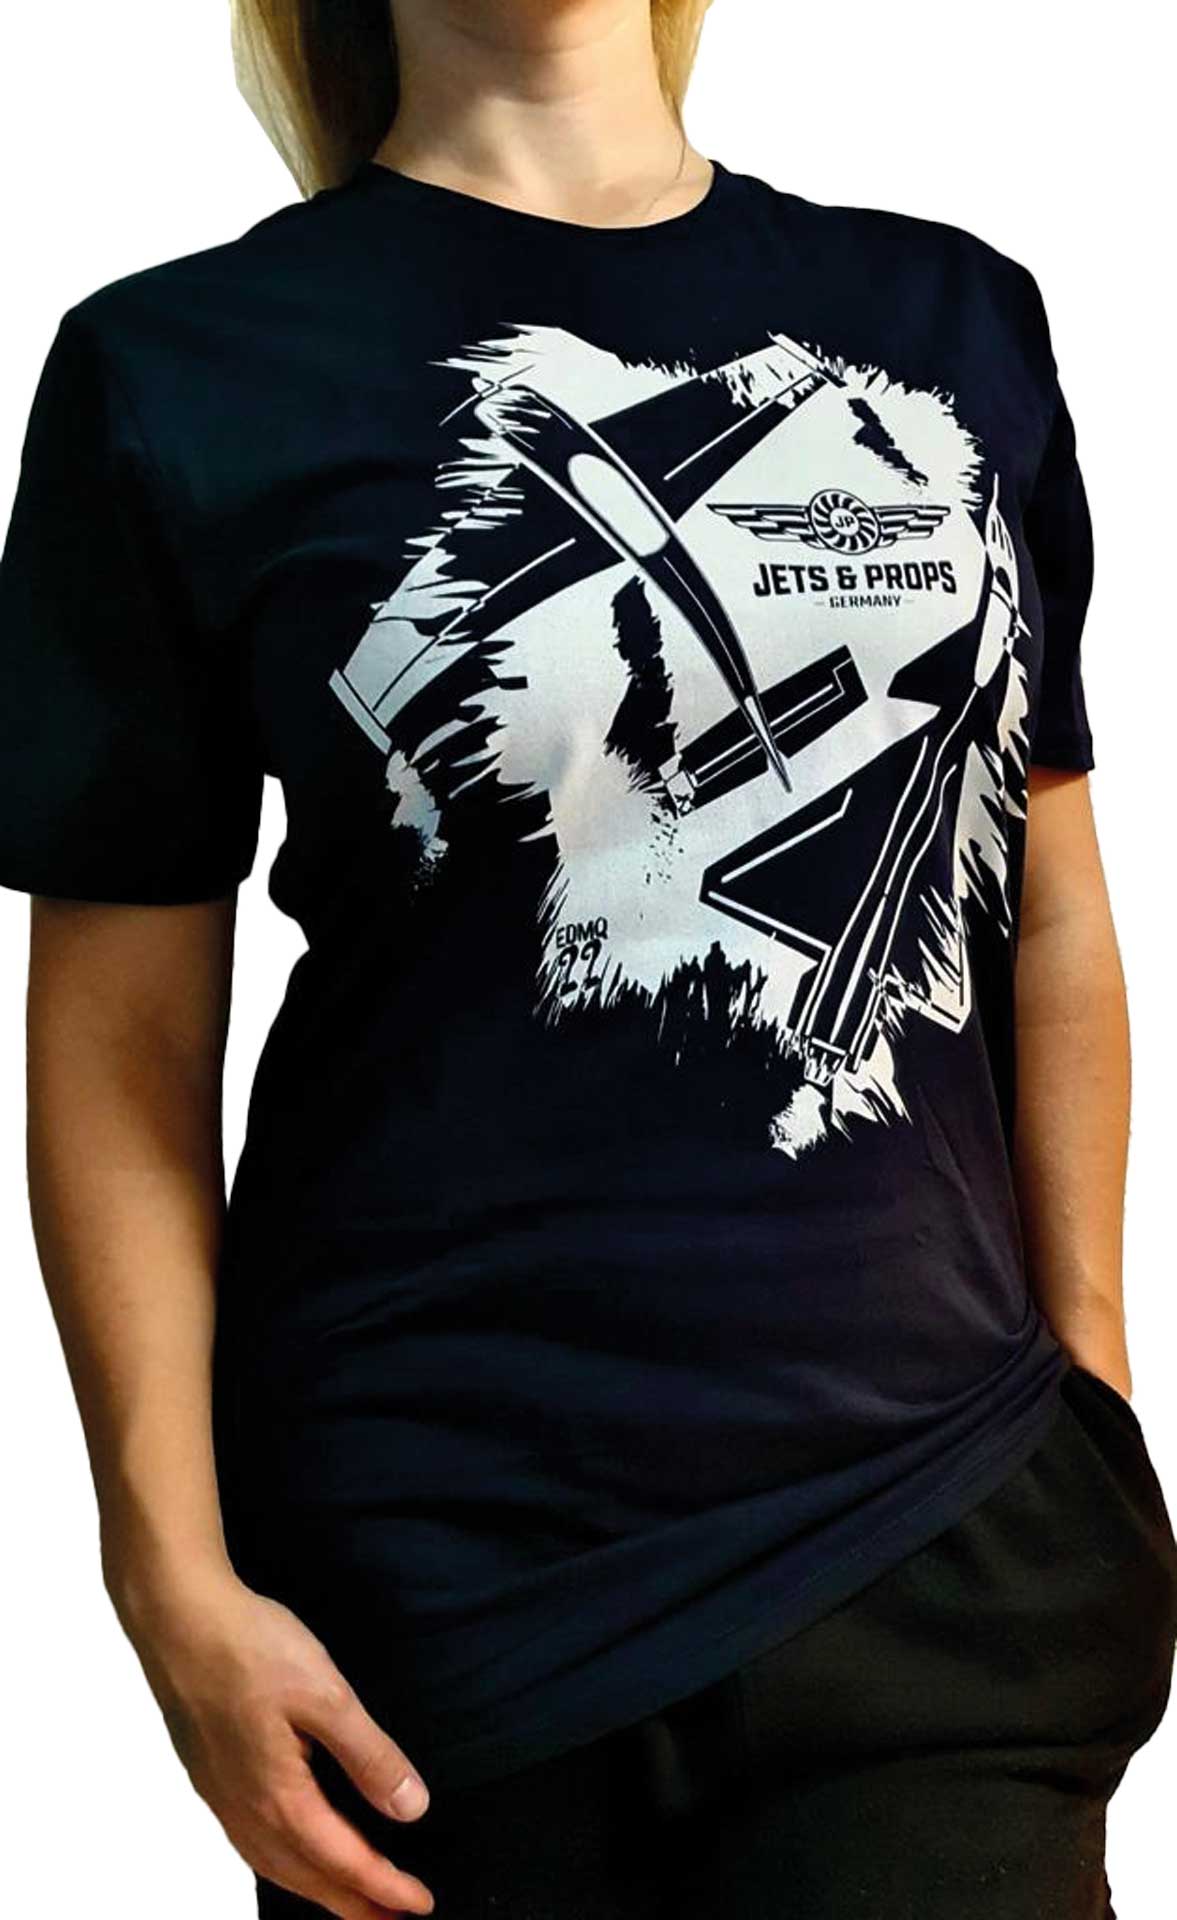 DIVERSE T-Shirt "L" Jets & Props grunge big 400, Premium, Navy, Digital direct print